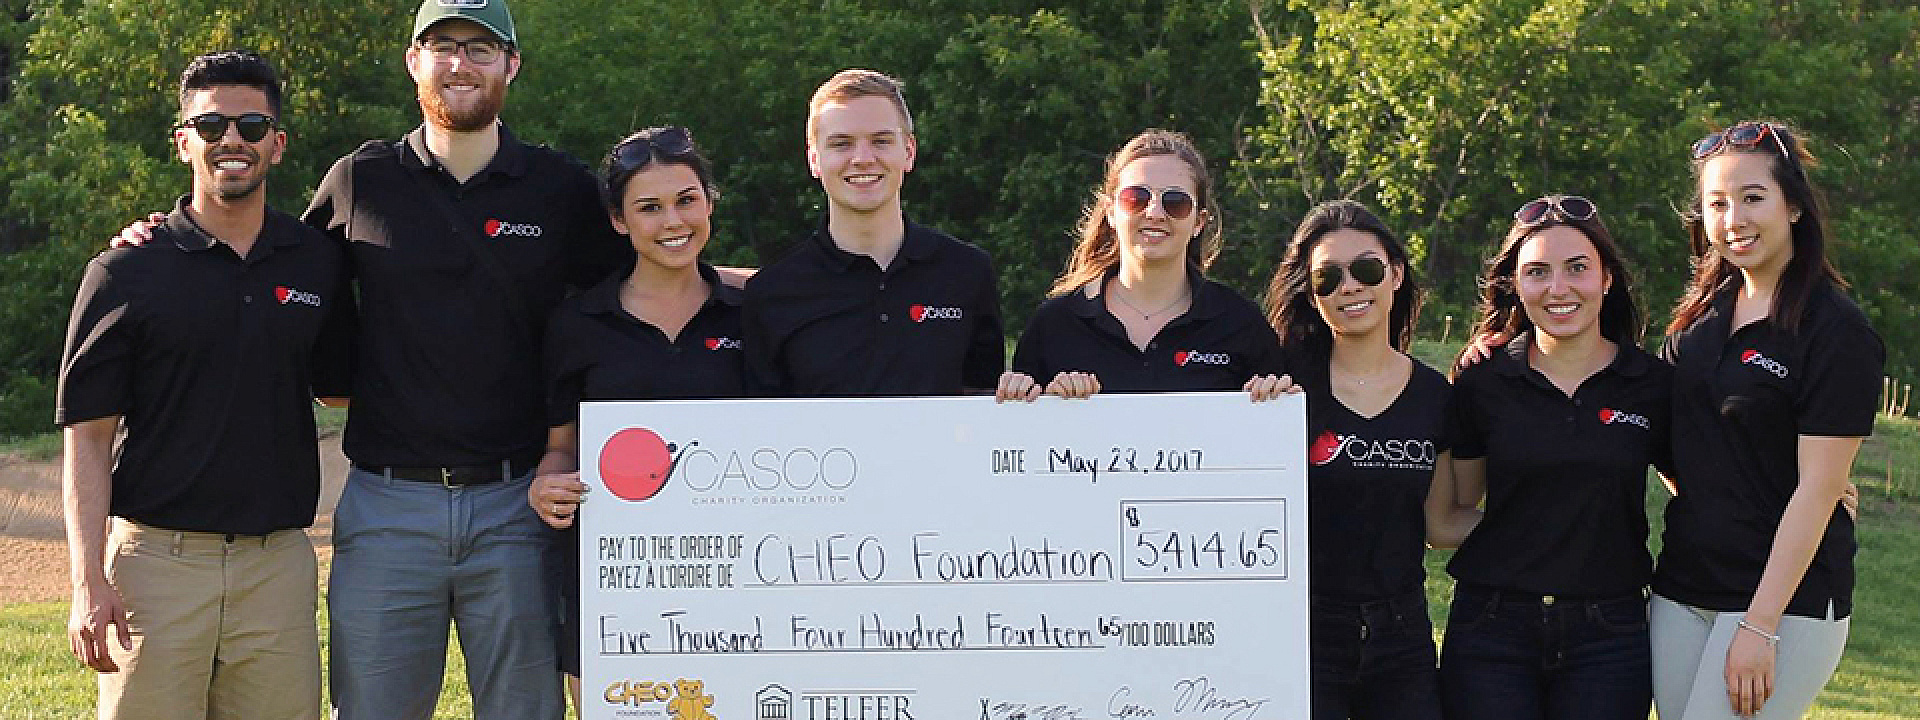 2nd Annual CASCO Golf Tournament Raises $5,414 for CHEO